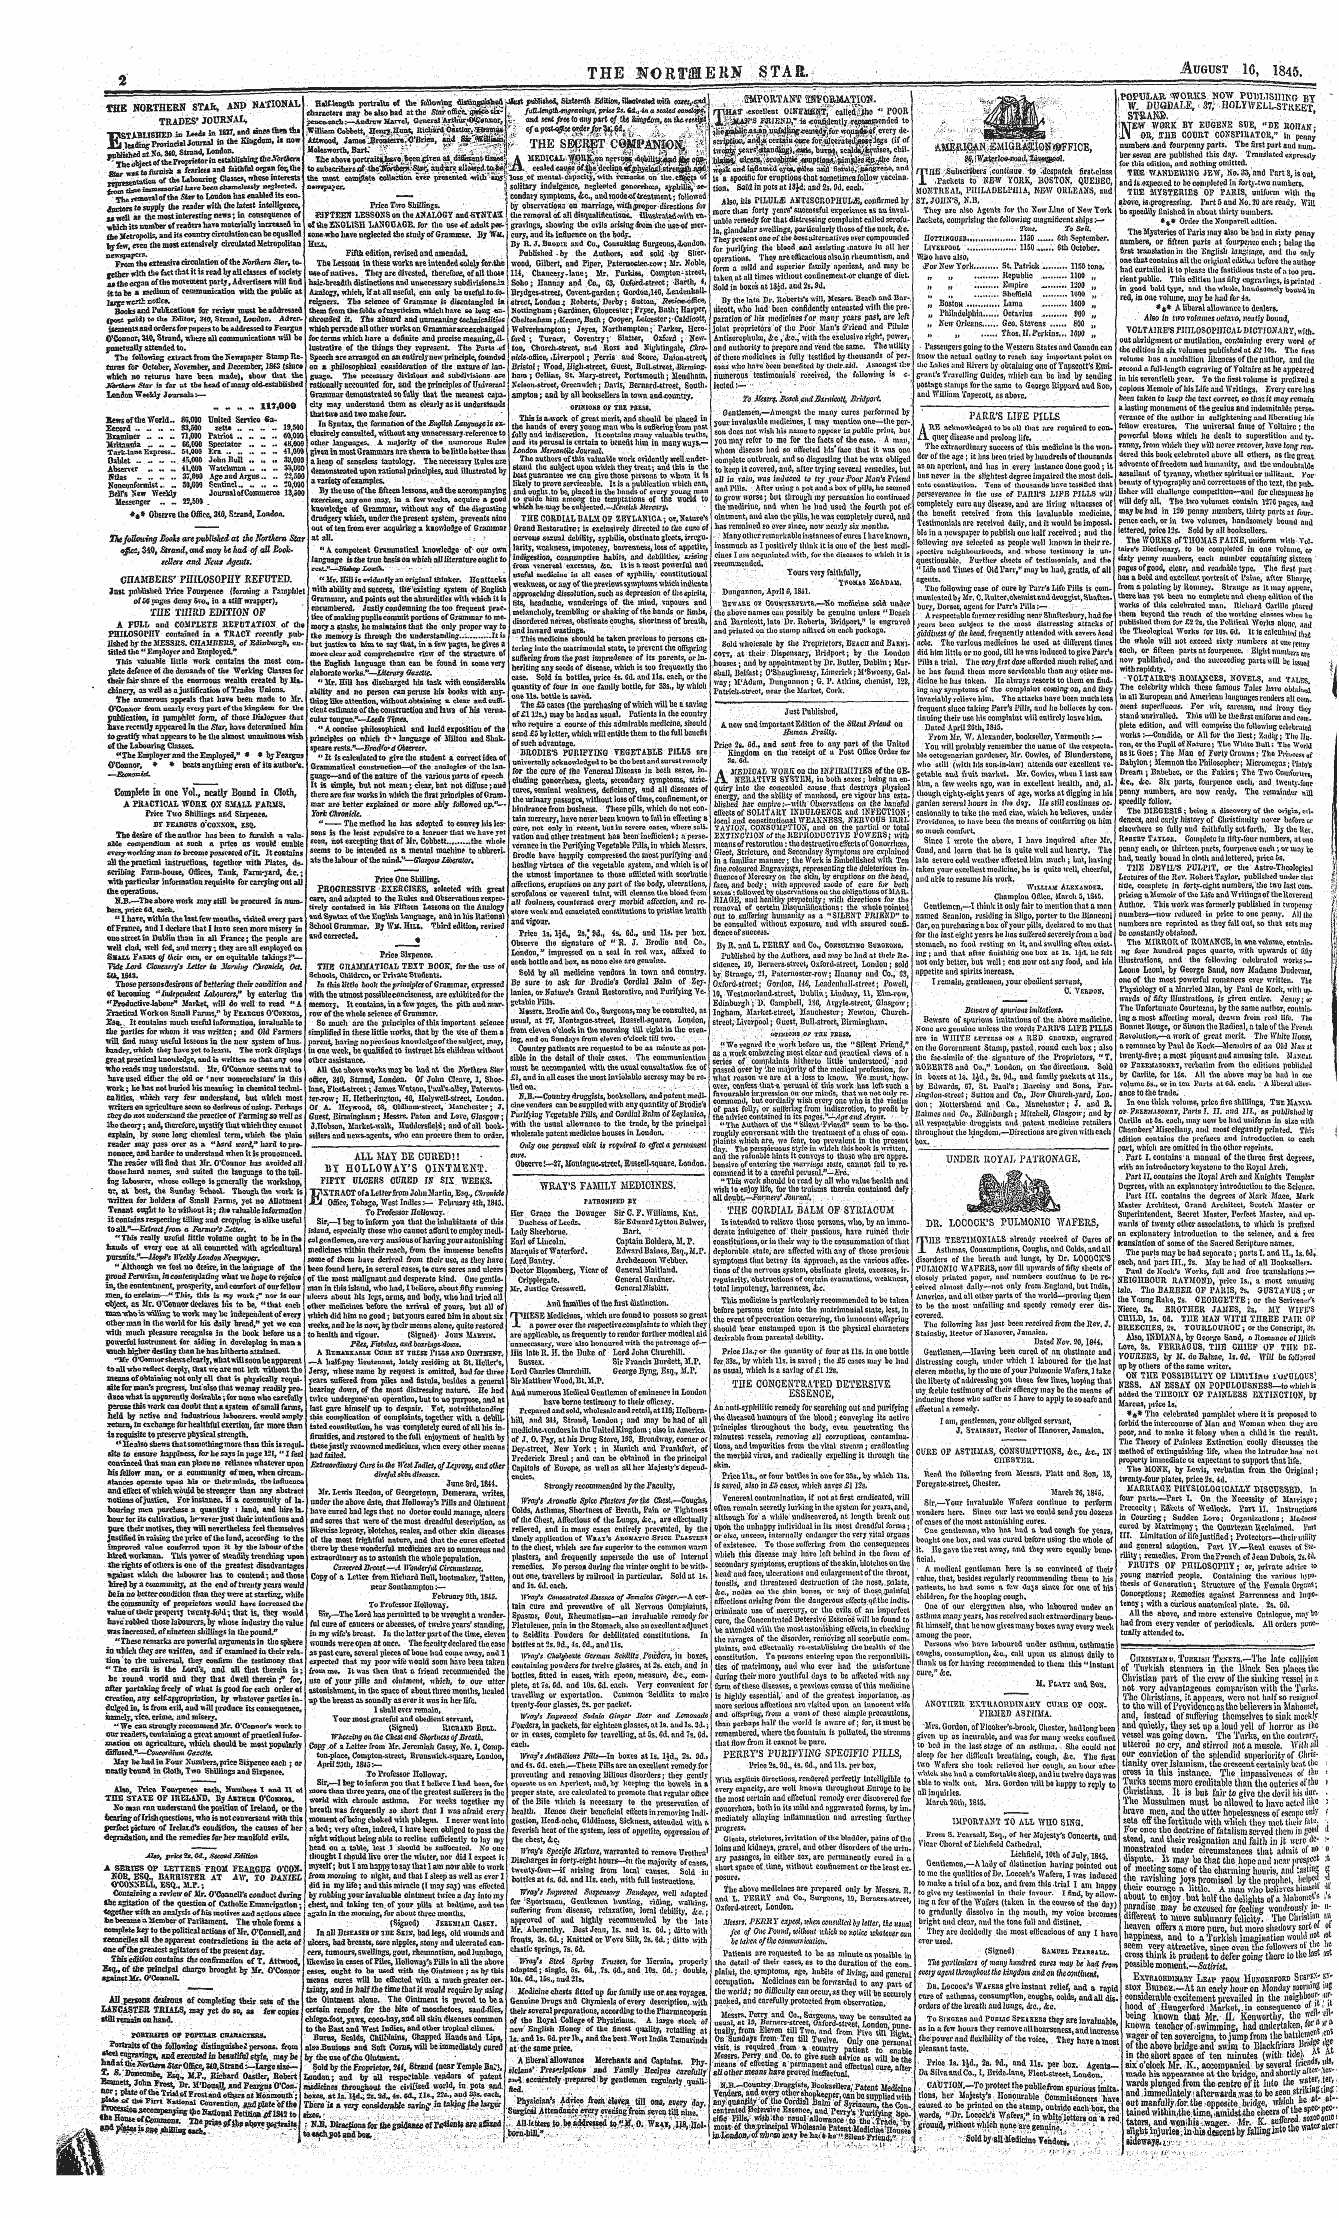 Northern Star (1837-1852): jS F Y, 3rd edition - Ad00208